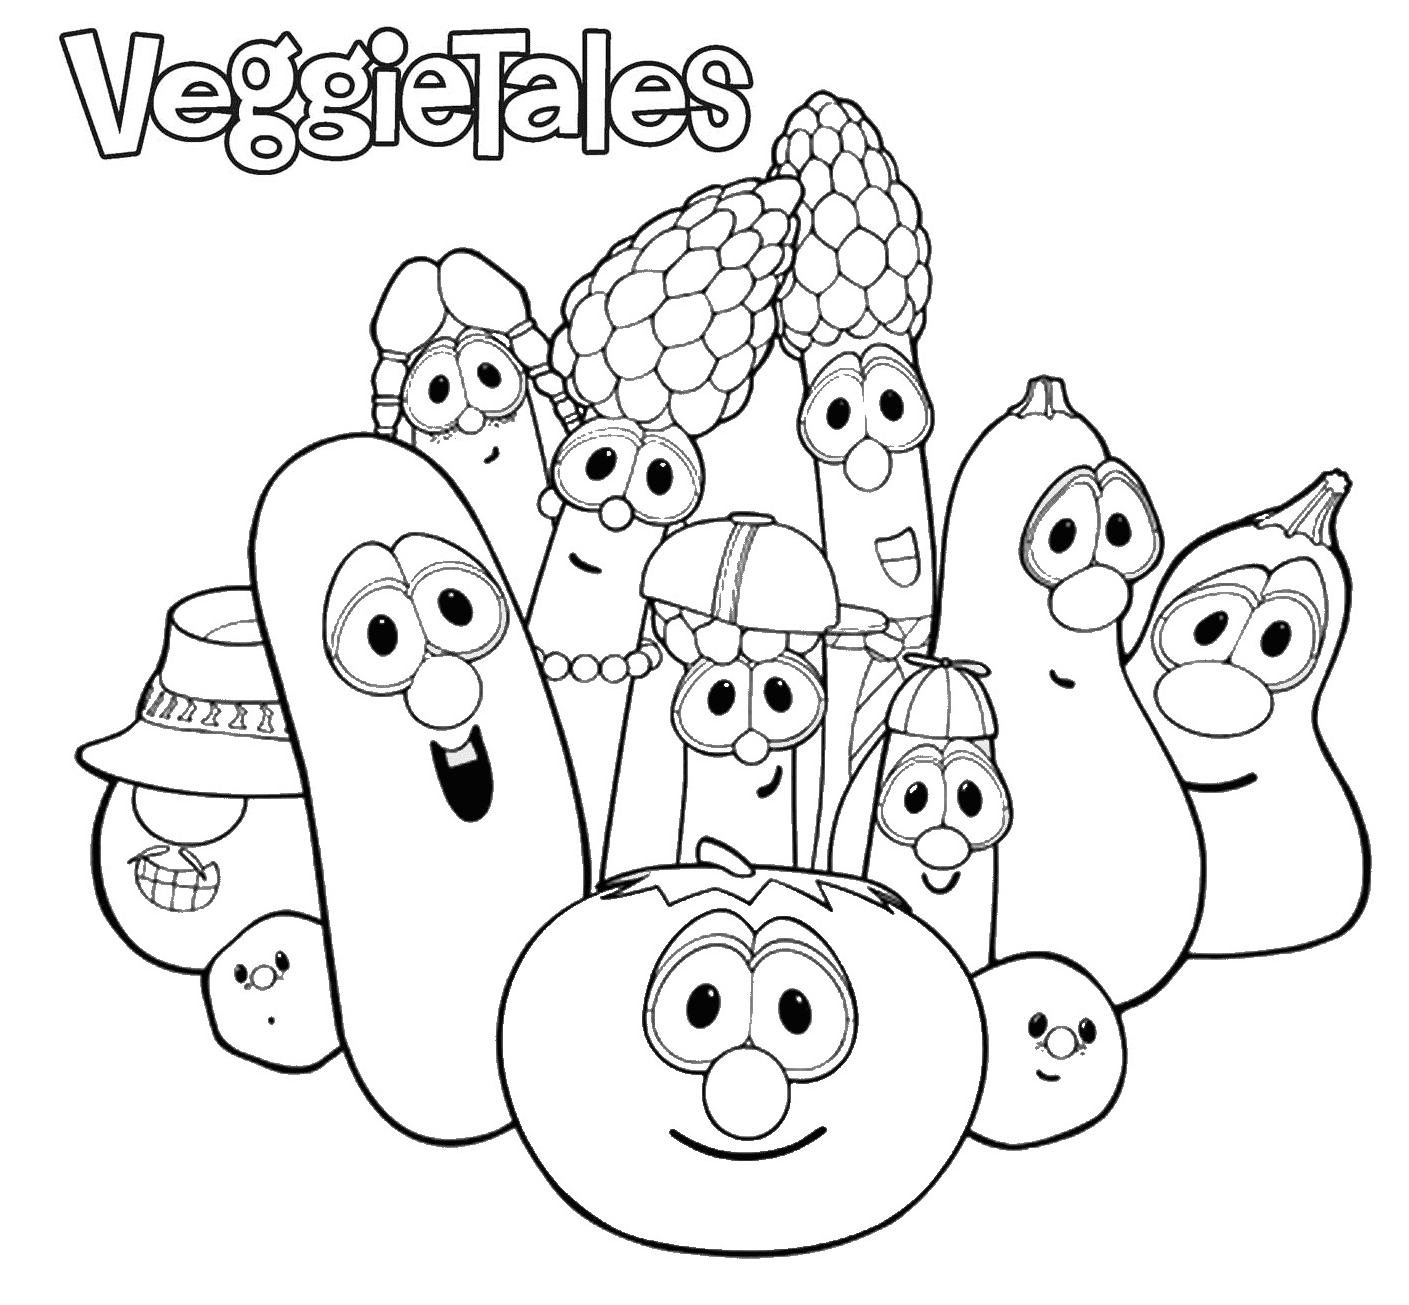 VeggieTales от VeggieTales